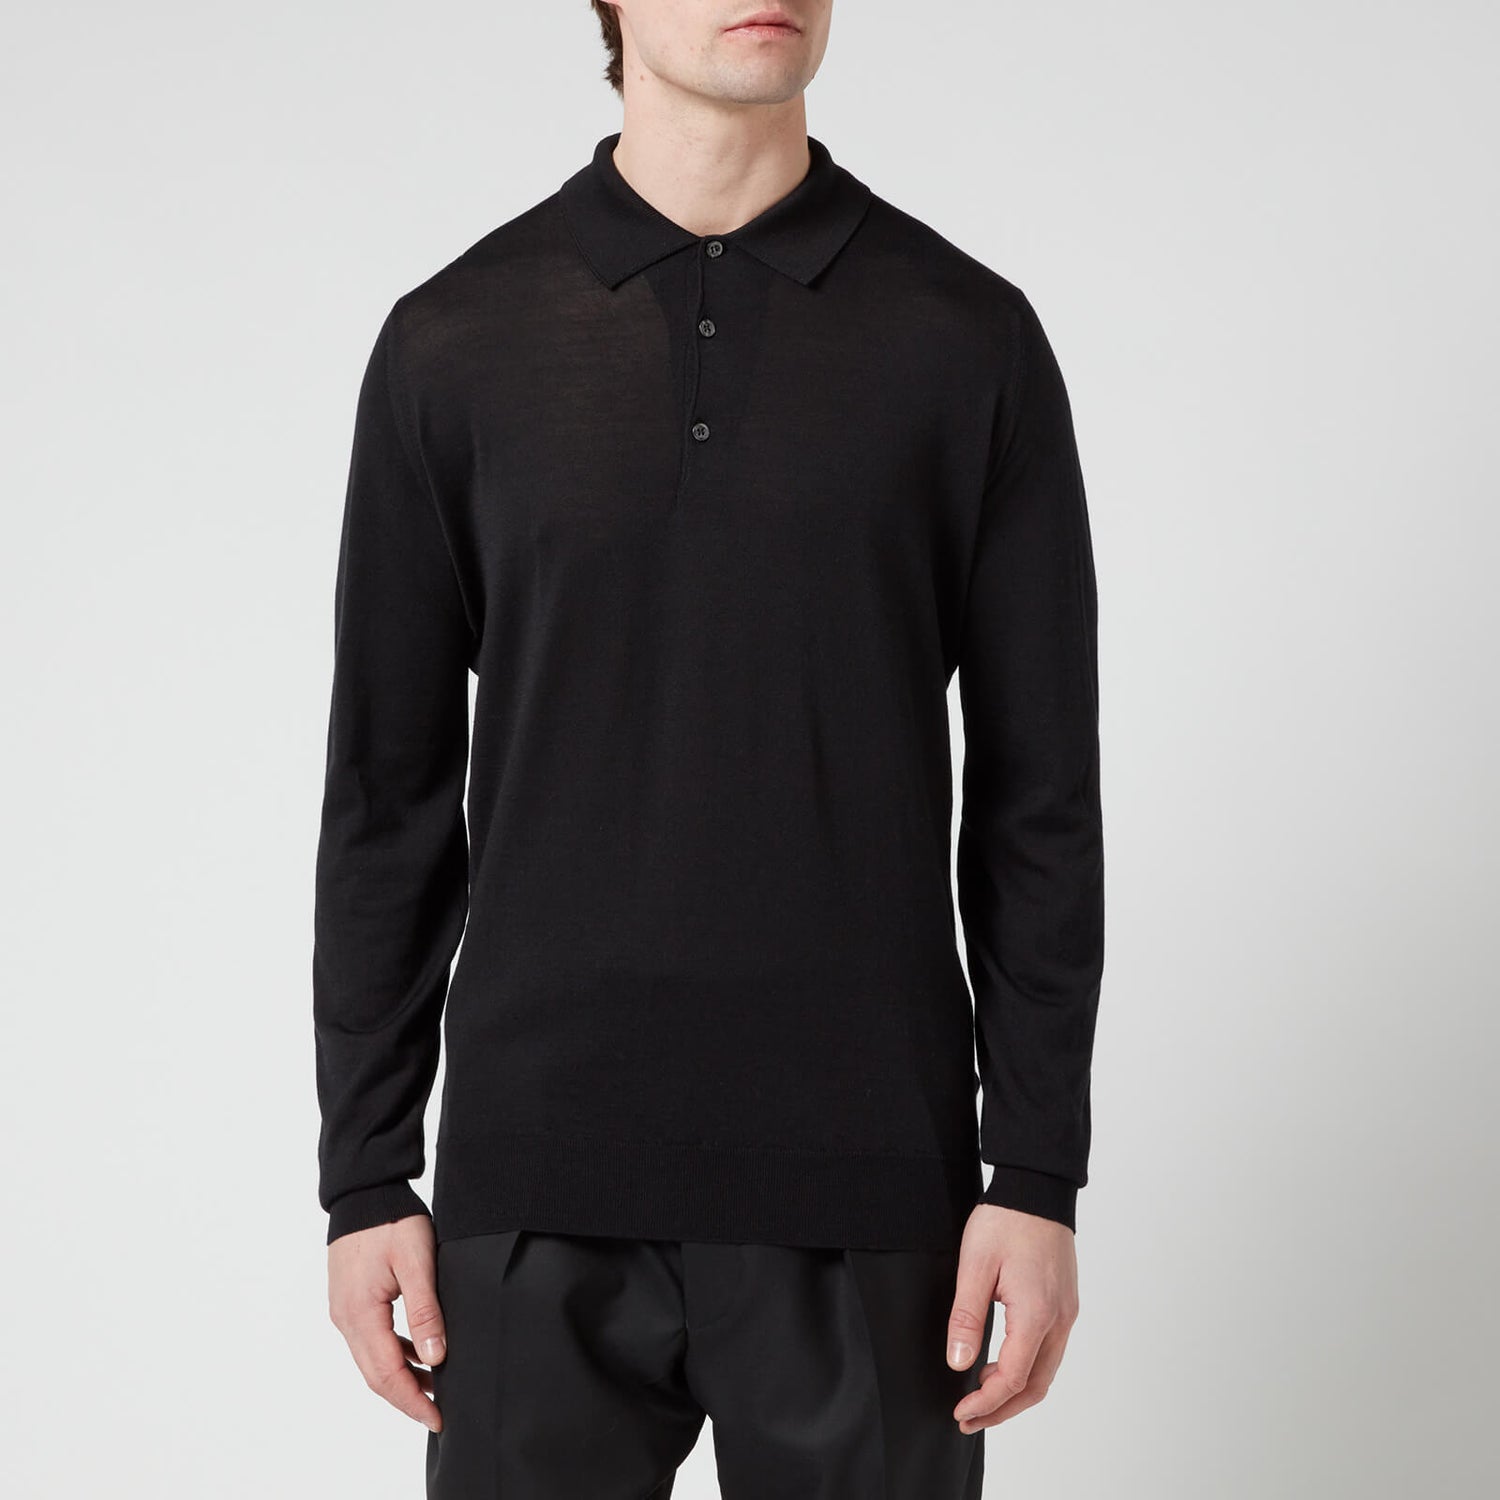 John Smedley Men's Cbelper Long Sleeve Polo Shirt - Black